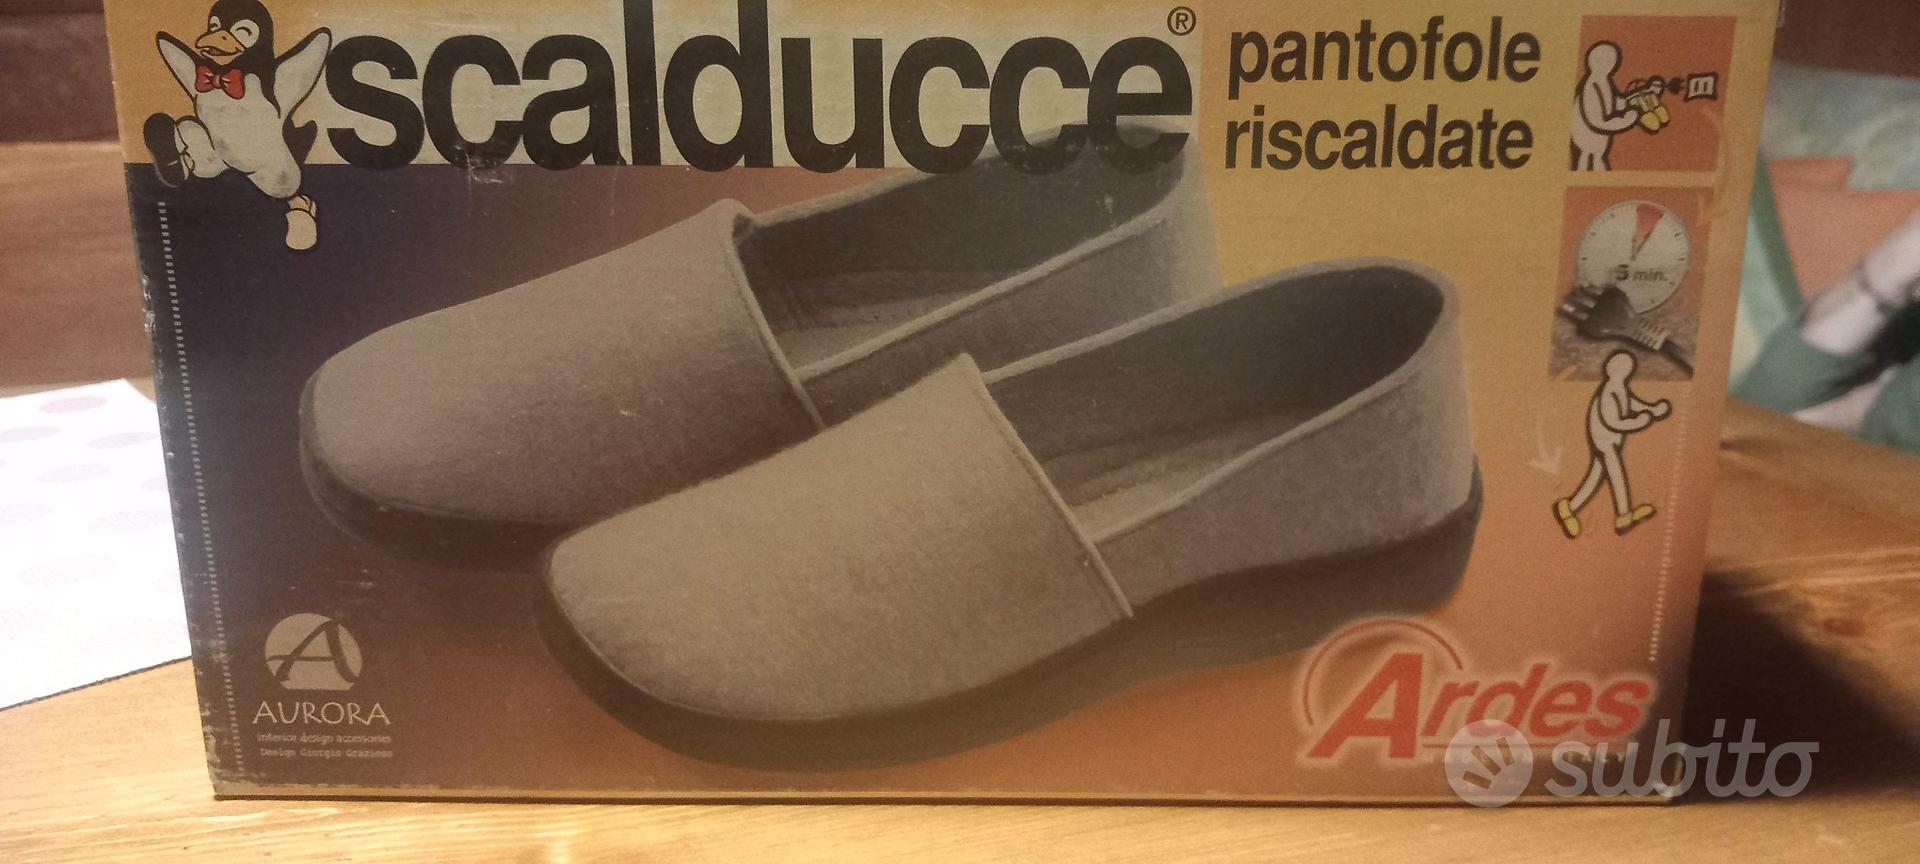 pantofole riscaldate - Abbigliamento e Accessori In vendita a Cuneo